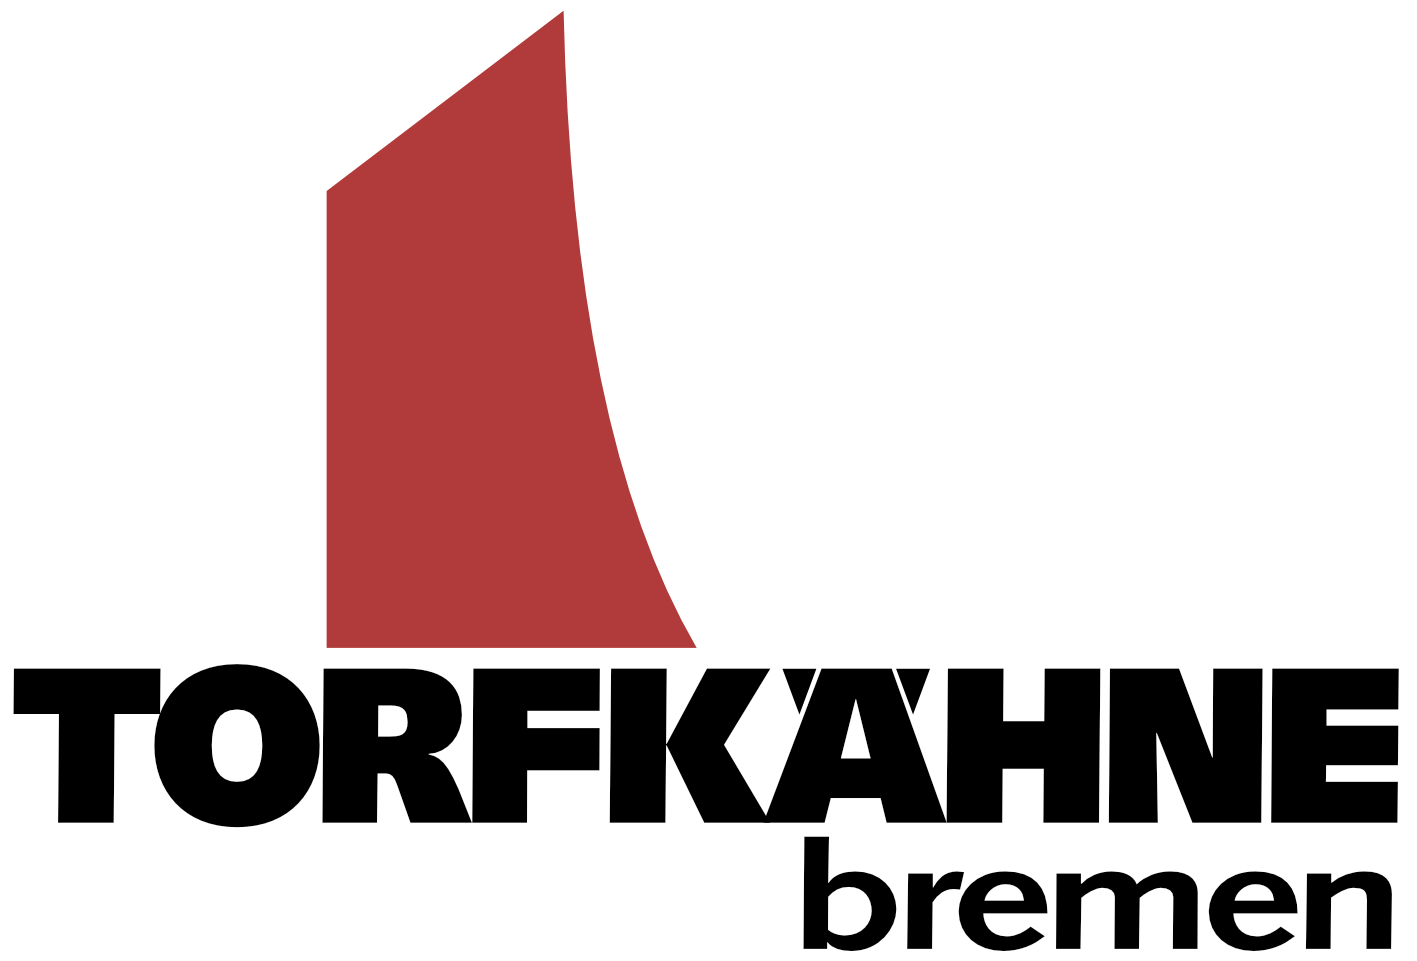 Torfkähne Bremen